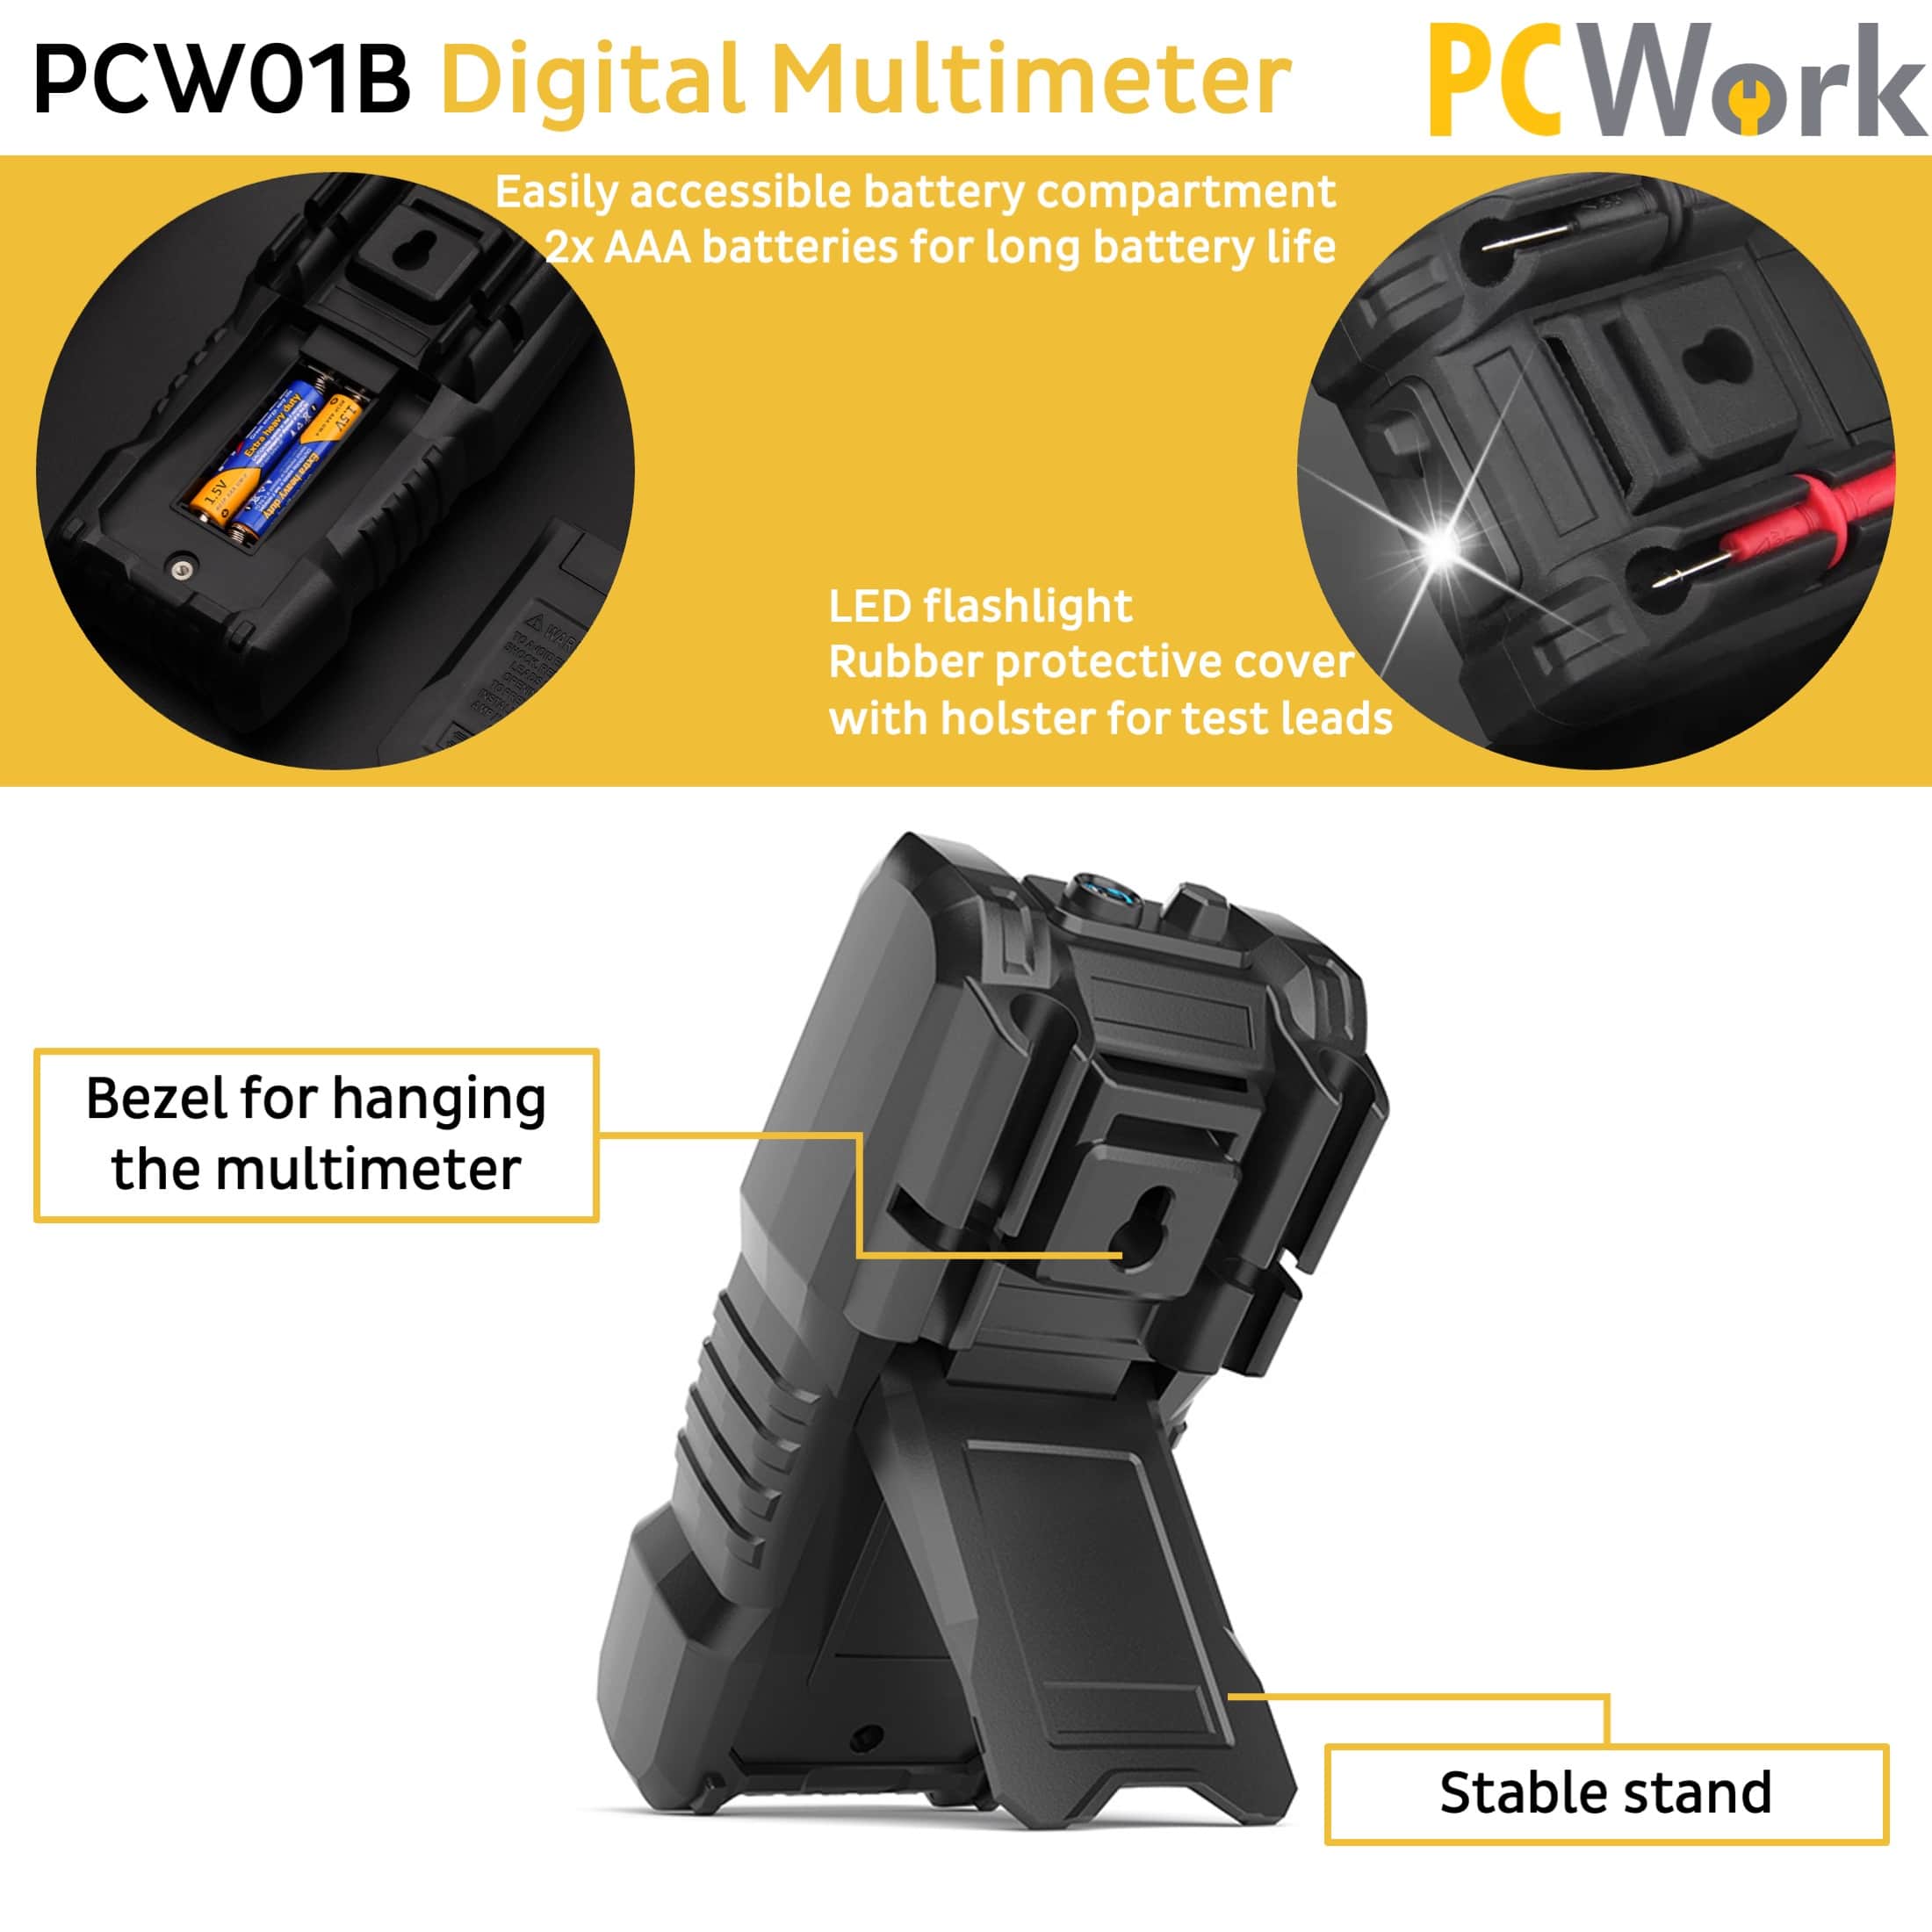 PCW01B Digital Multimeter, True RMS, Auto Range